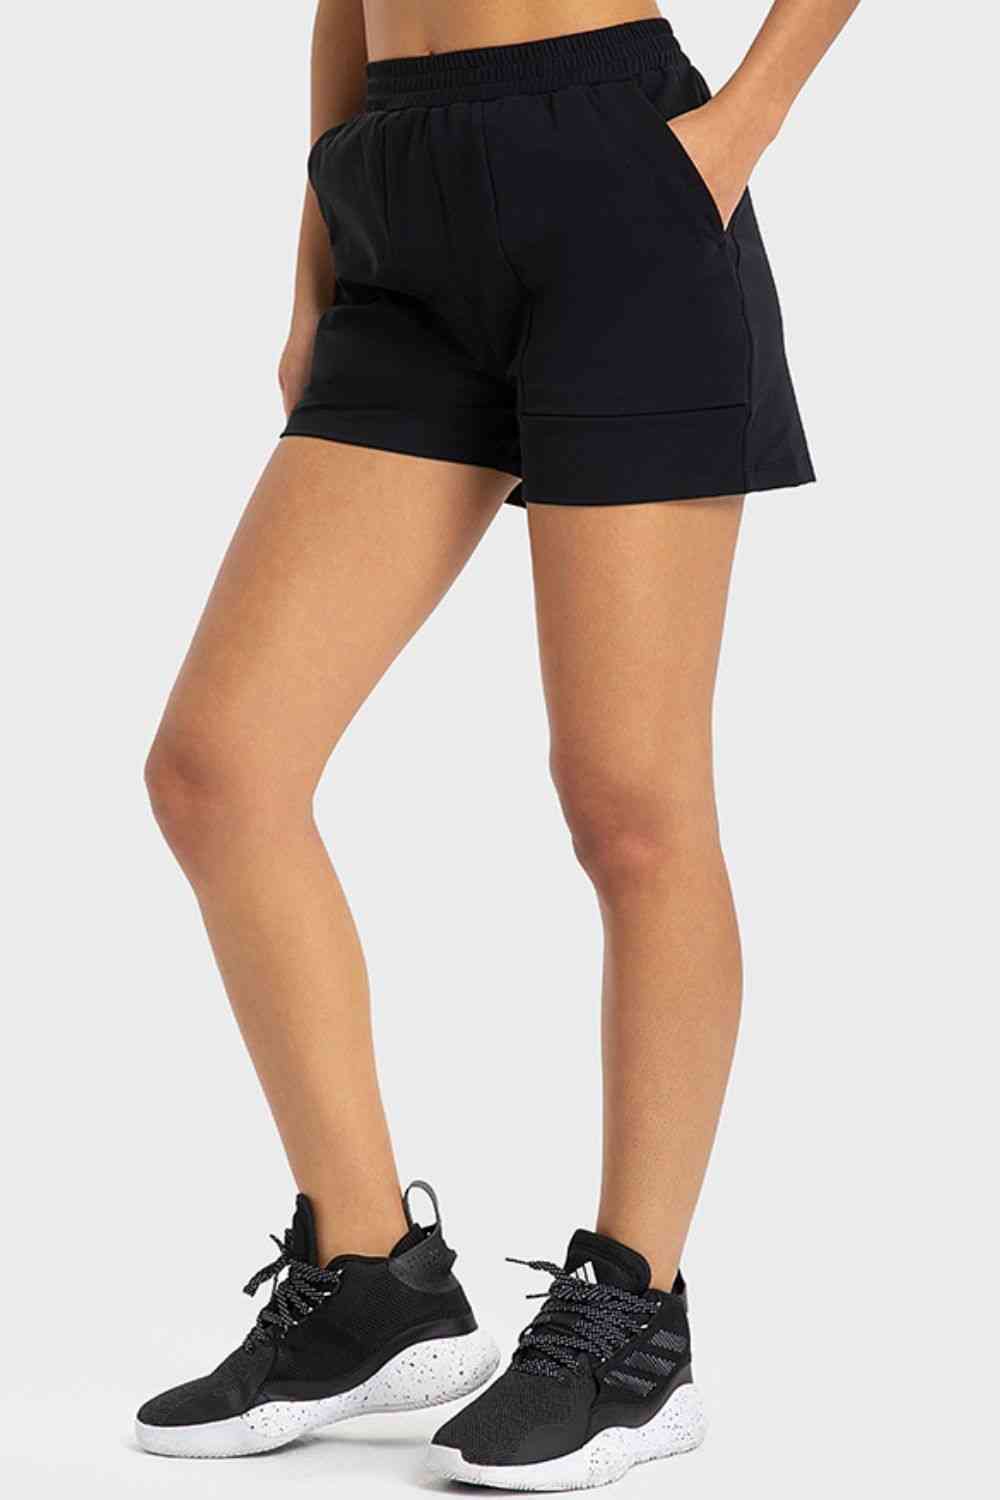 Elastic Waist Sports Shorts with Pockets - TRENDMELO